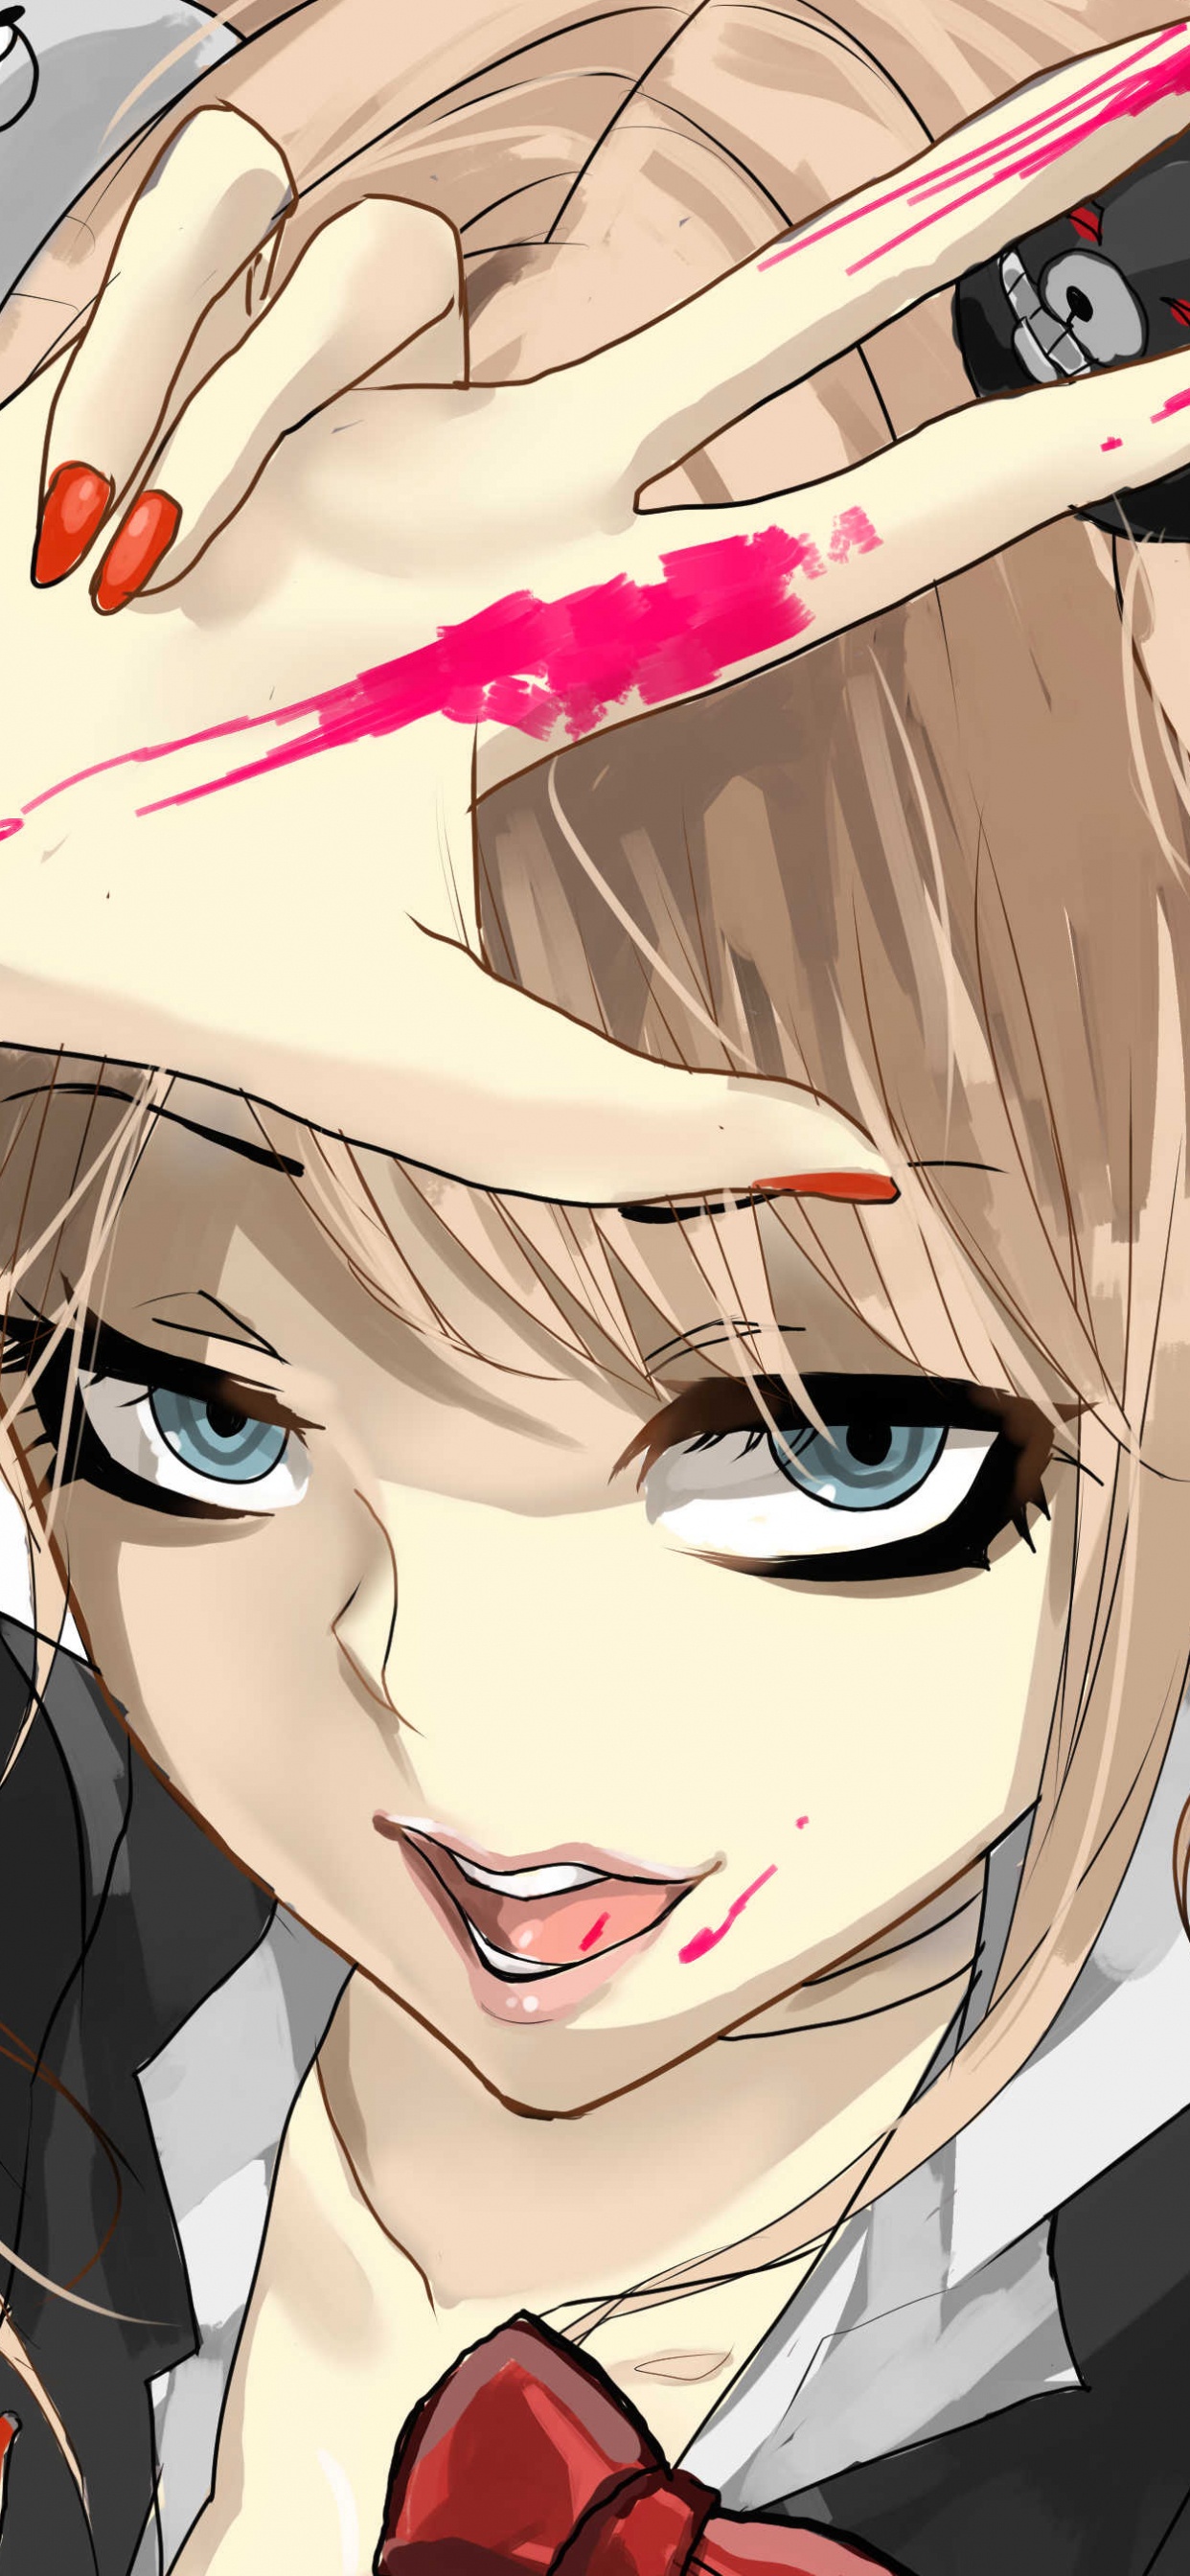 Anime-Charakter Mit Blonden Haaren. Wallpaper in 1242x2688 Resolution